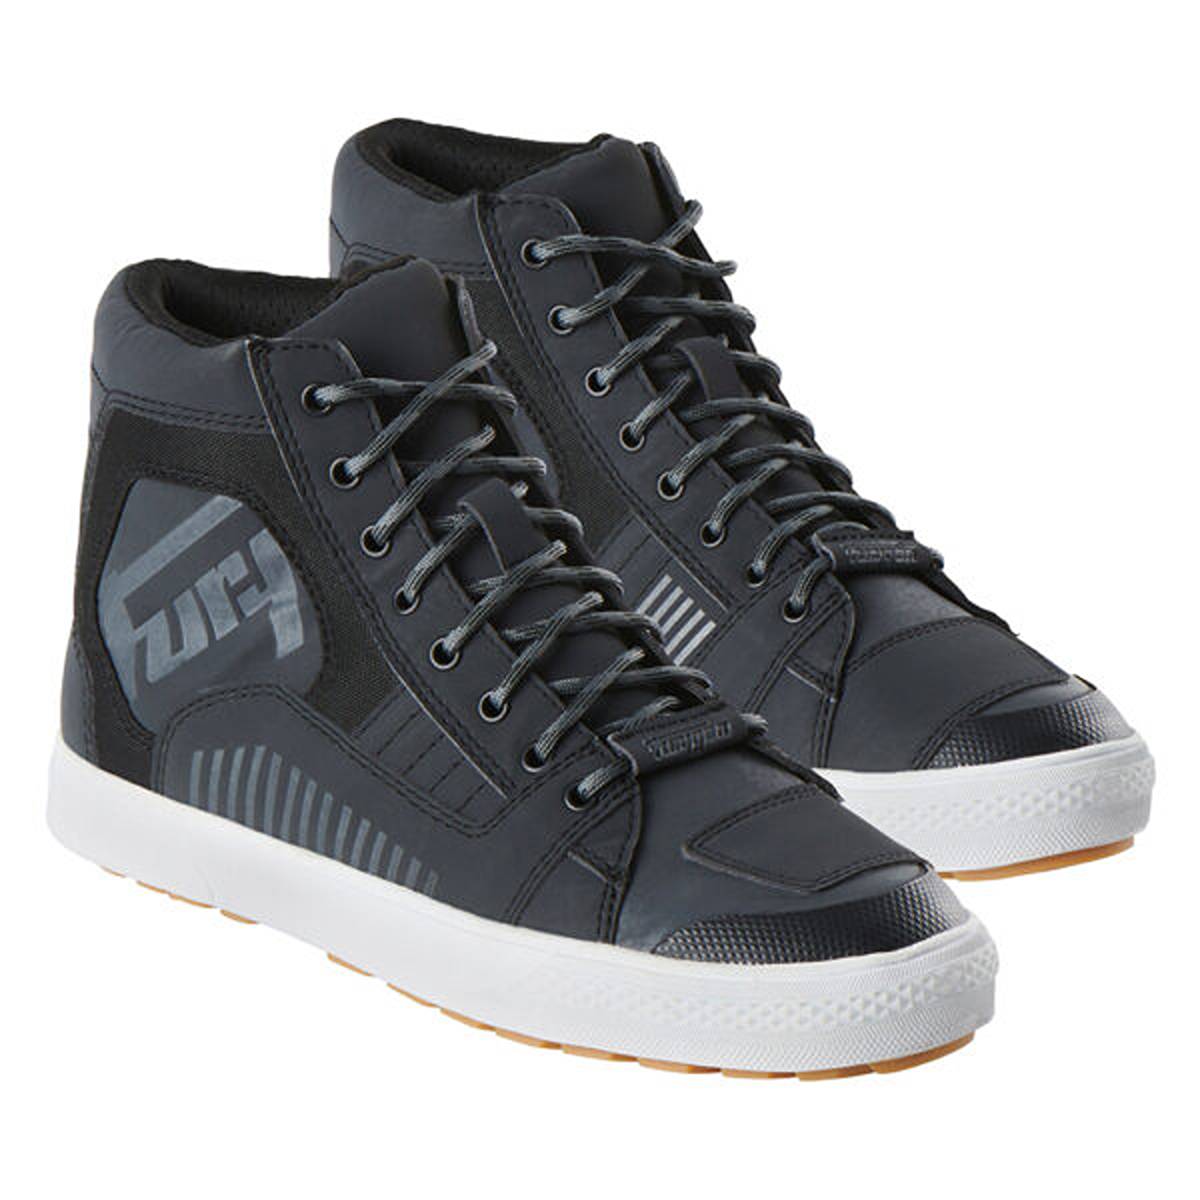 Image of Furygan Sacramento D30 Shoes Black Size 40 ID 3435980368258